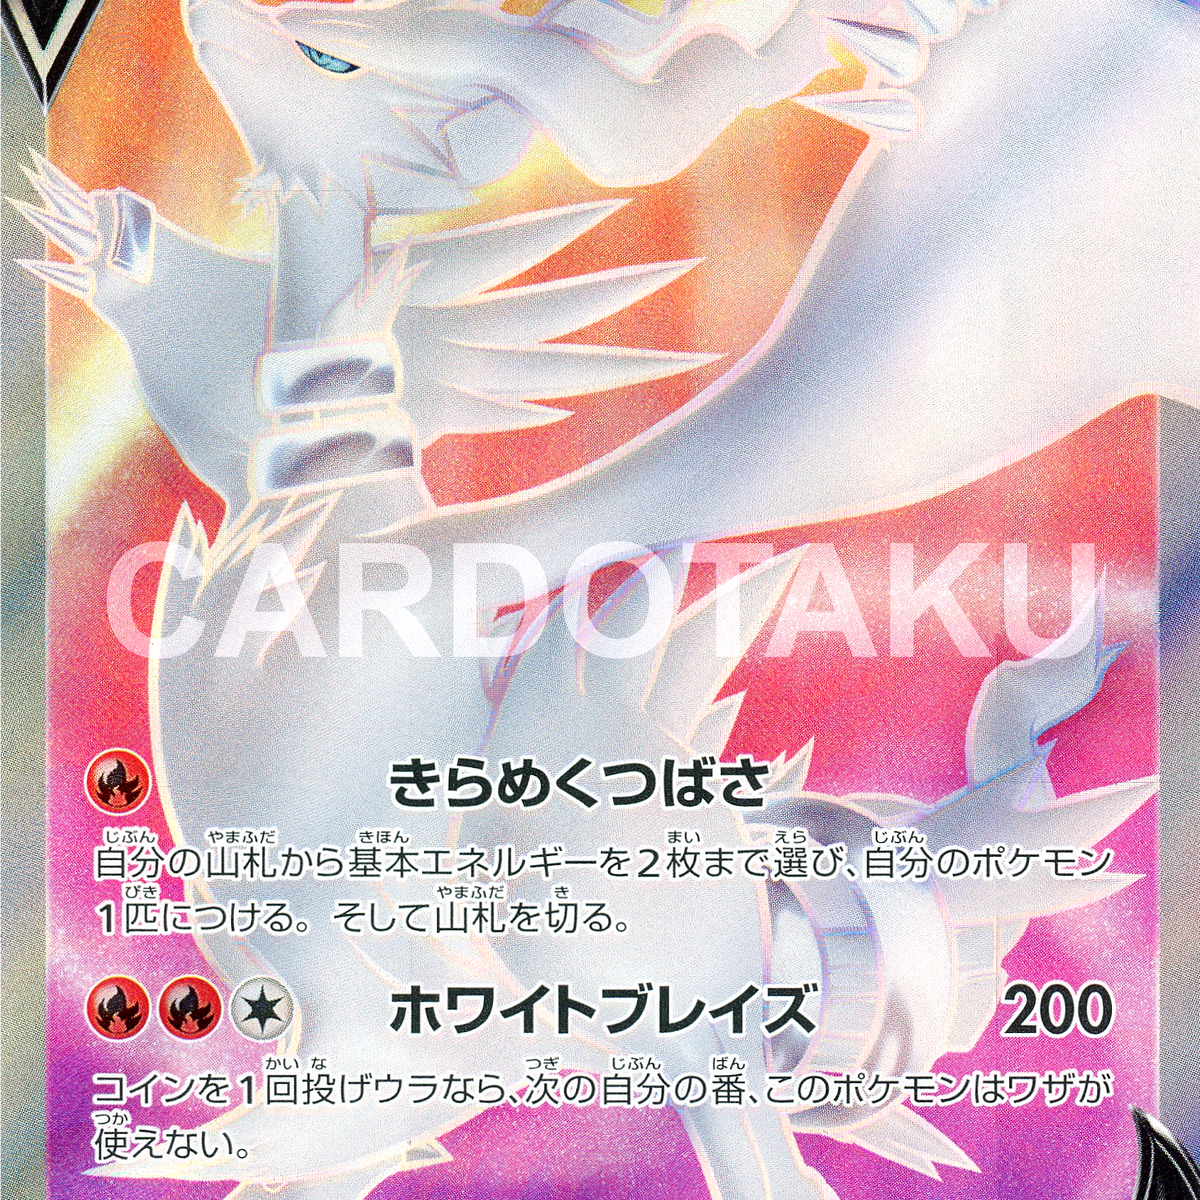 Reshiram V 076/068 SR Incandescent Arcana - Pokemon TCG Japanese